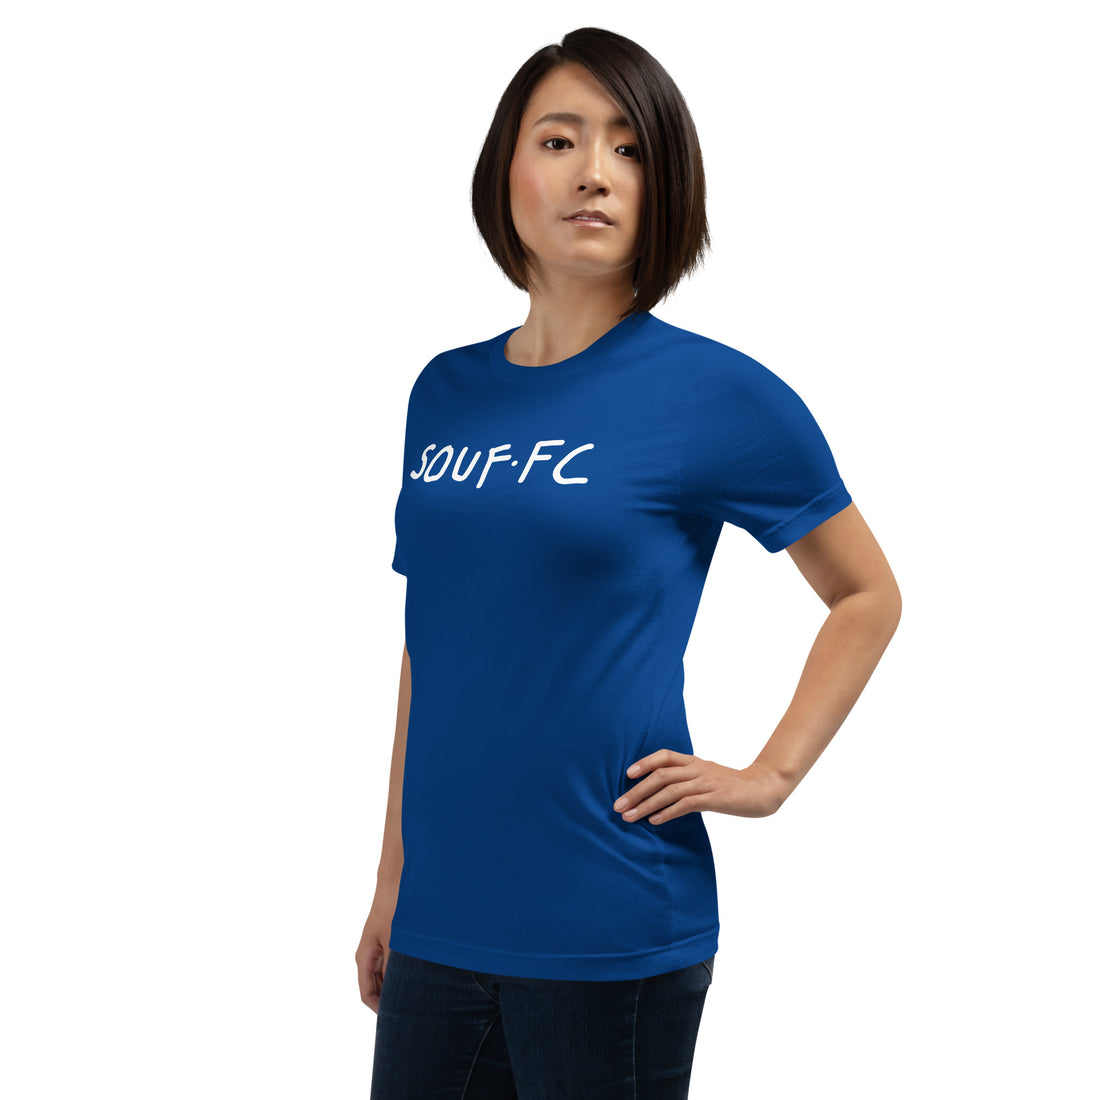 Souf FC Simple As Soccer Shirt